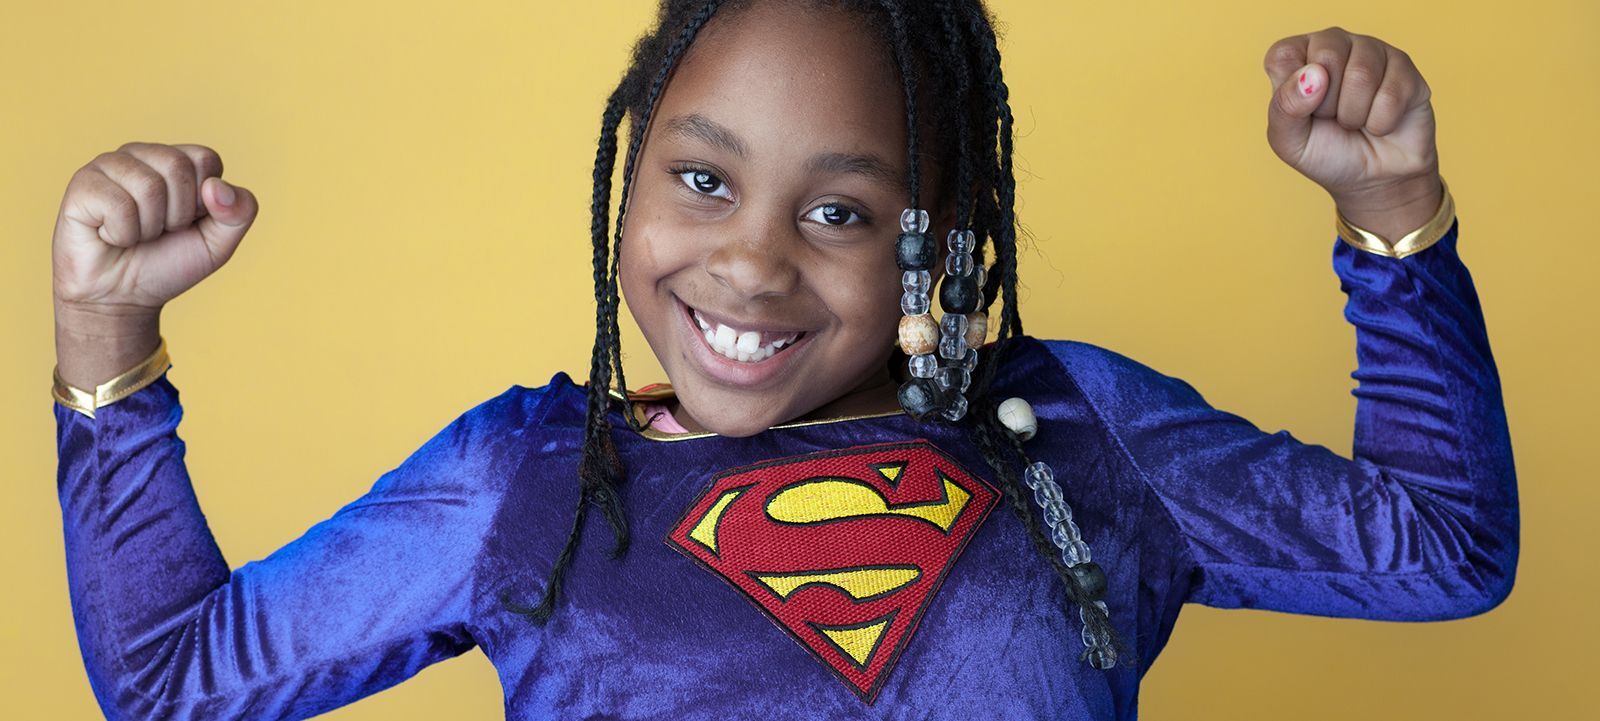 Little girl wearing a superman costume.